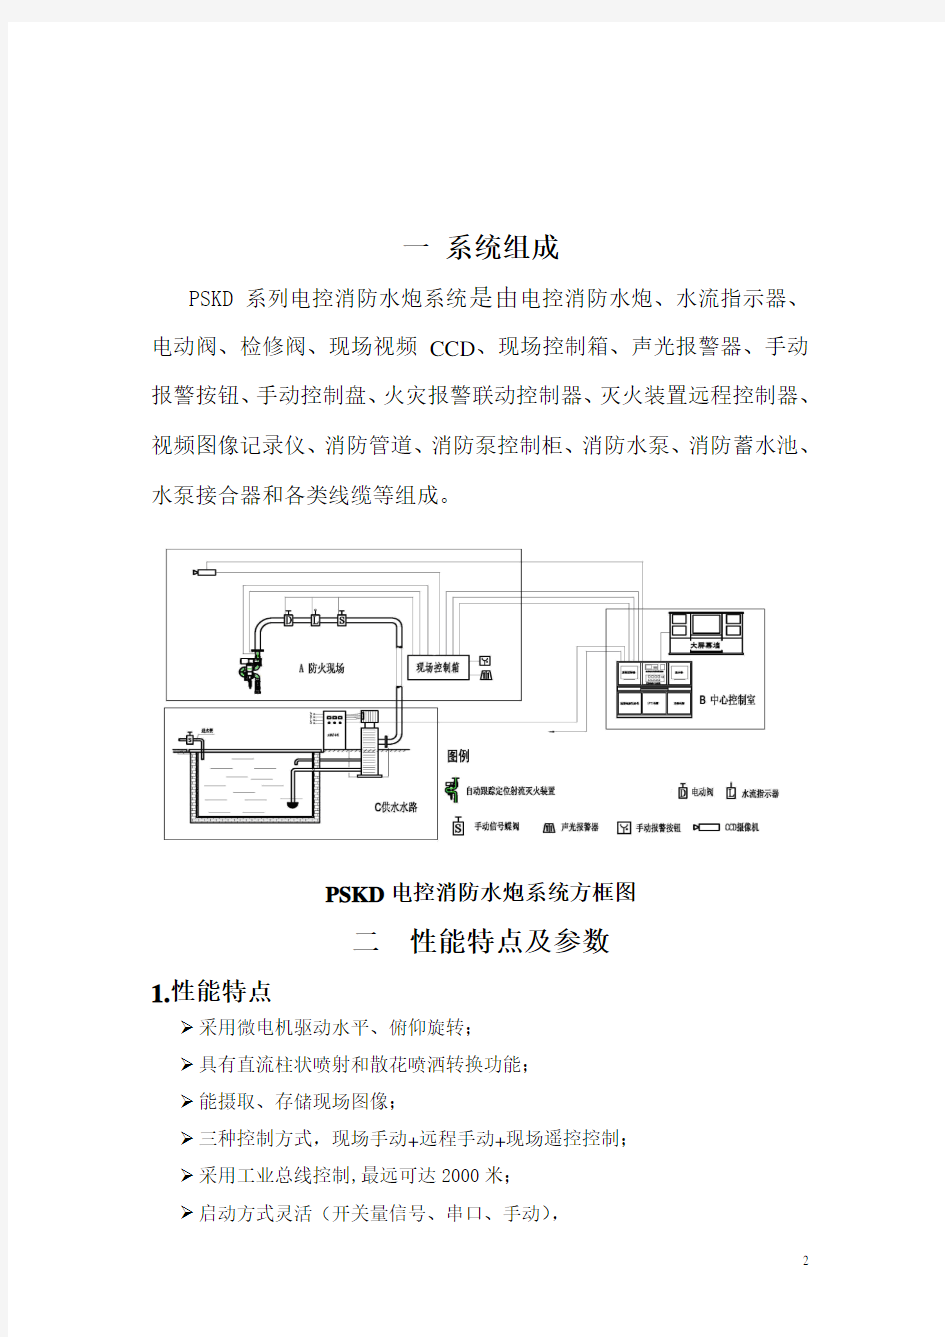 PSKD (20,30)电控消防水炮系统安装使用说明书